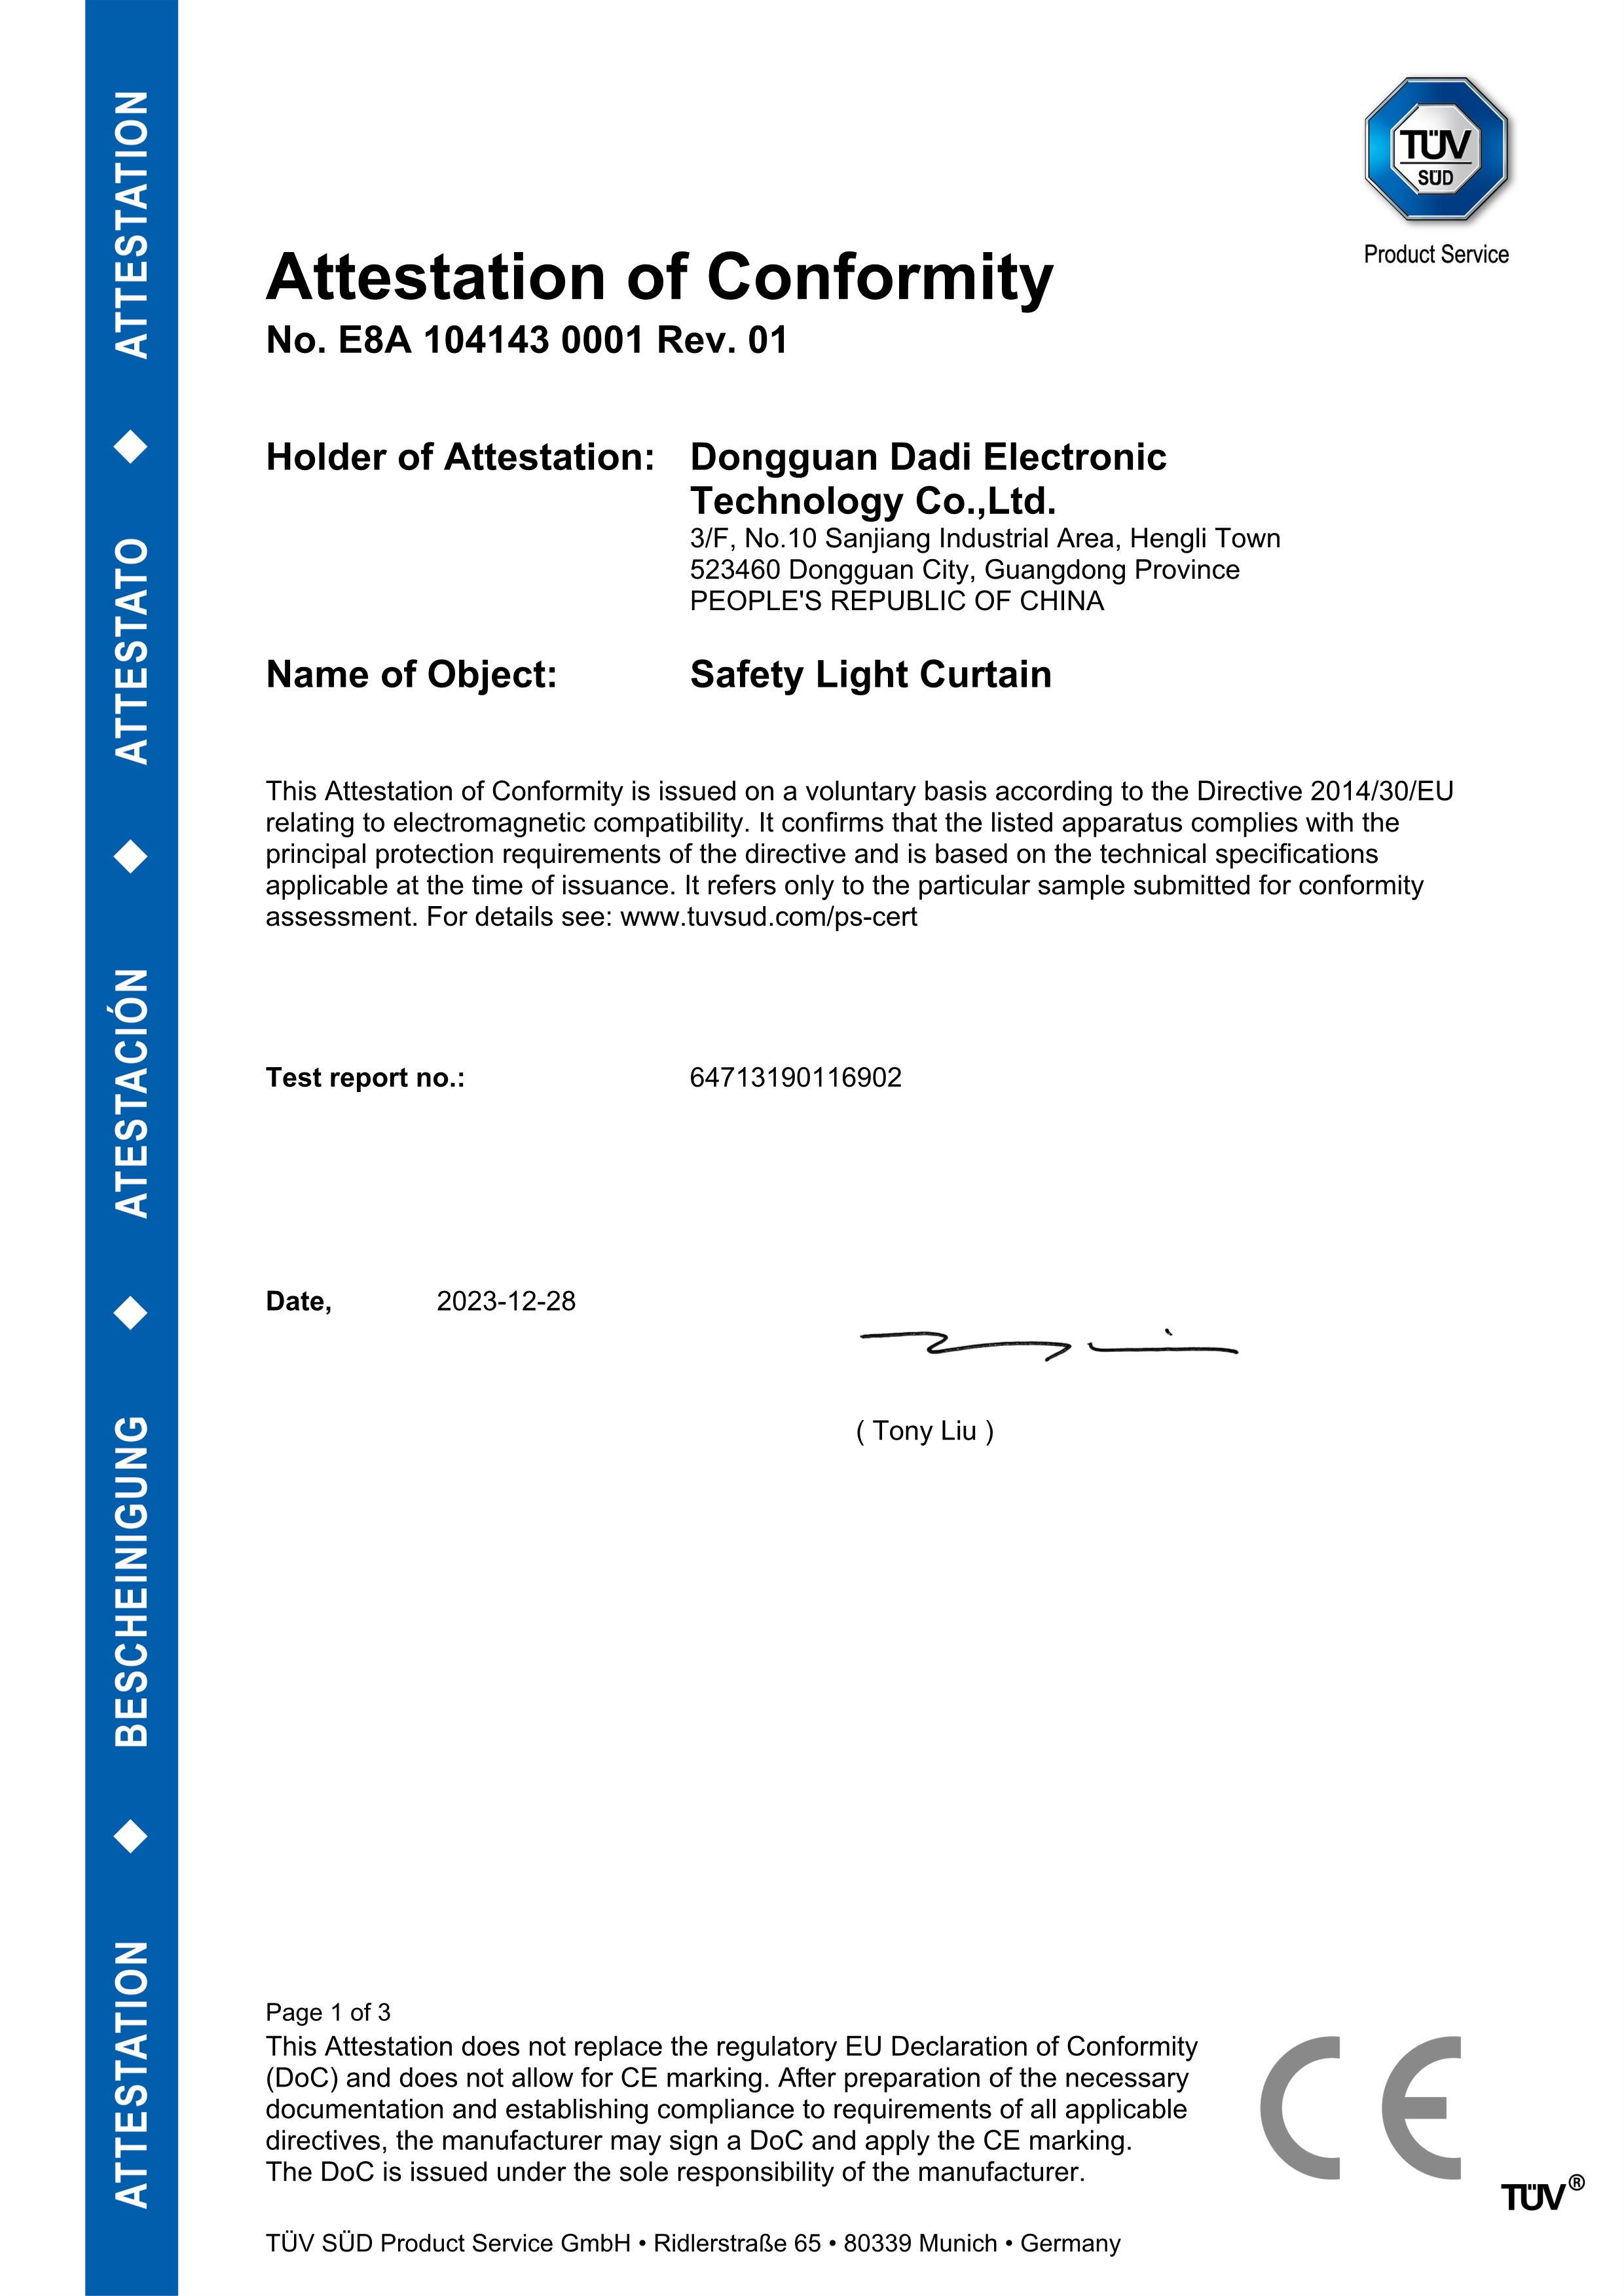 TÜV Certificate of Safety Light Curtain